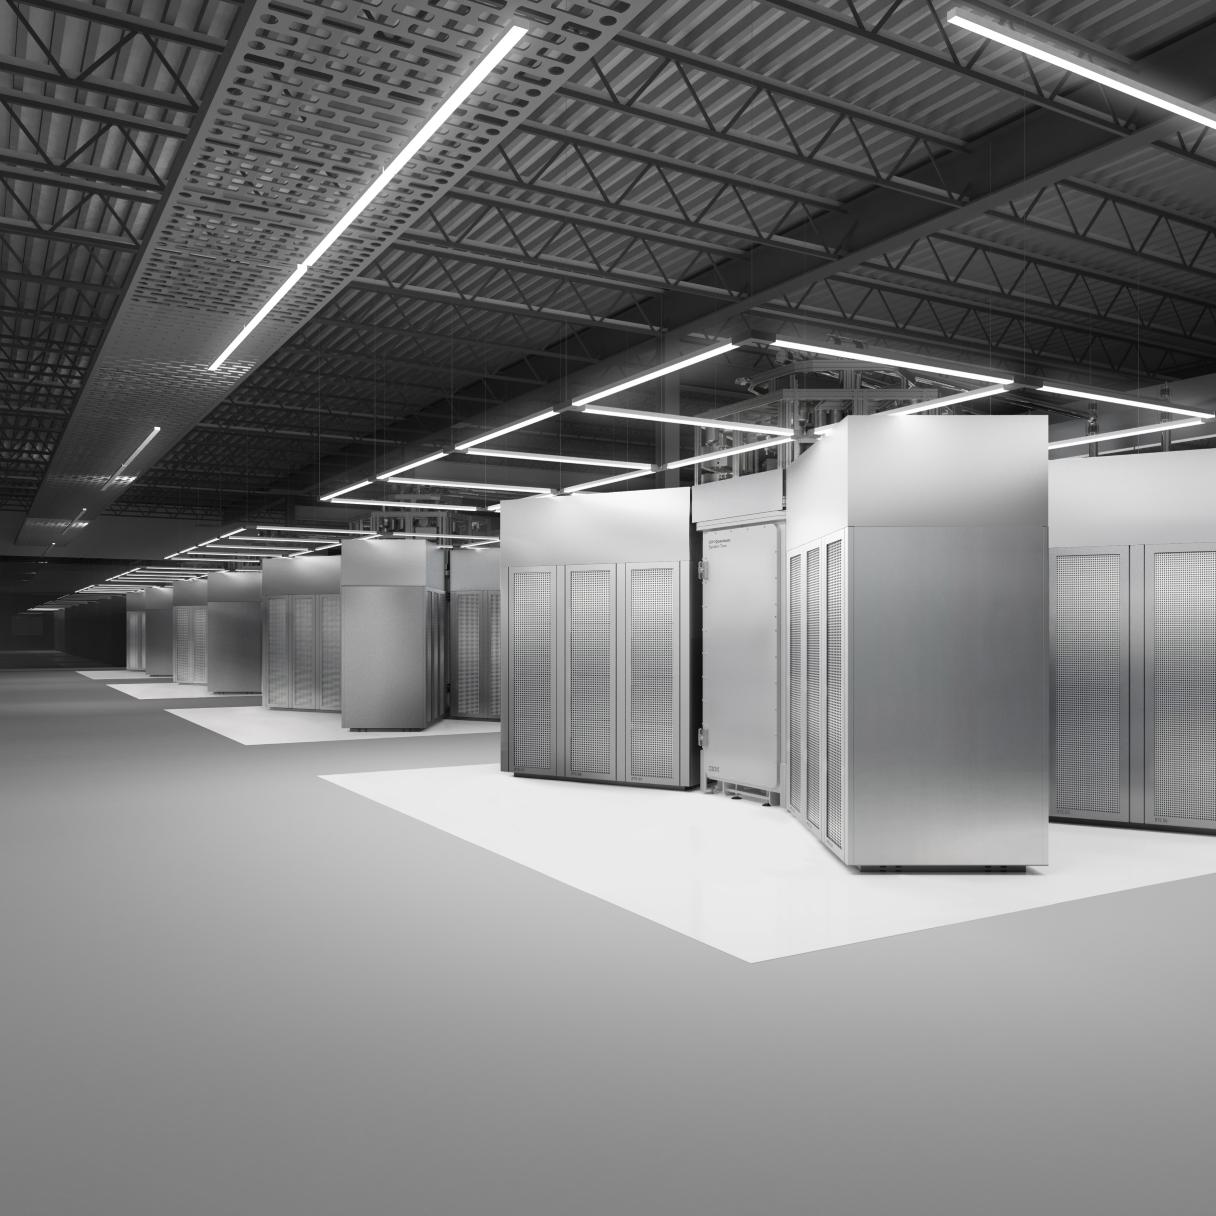 Inside look at an IBM Quantum data center